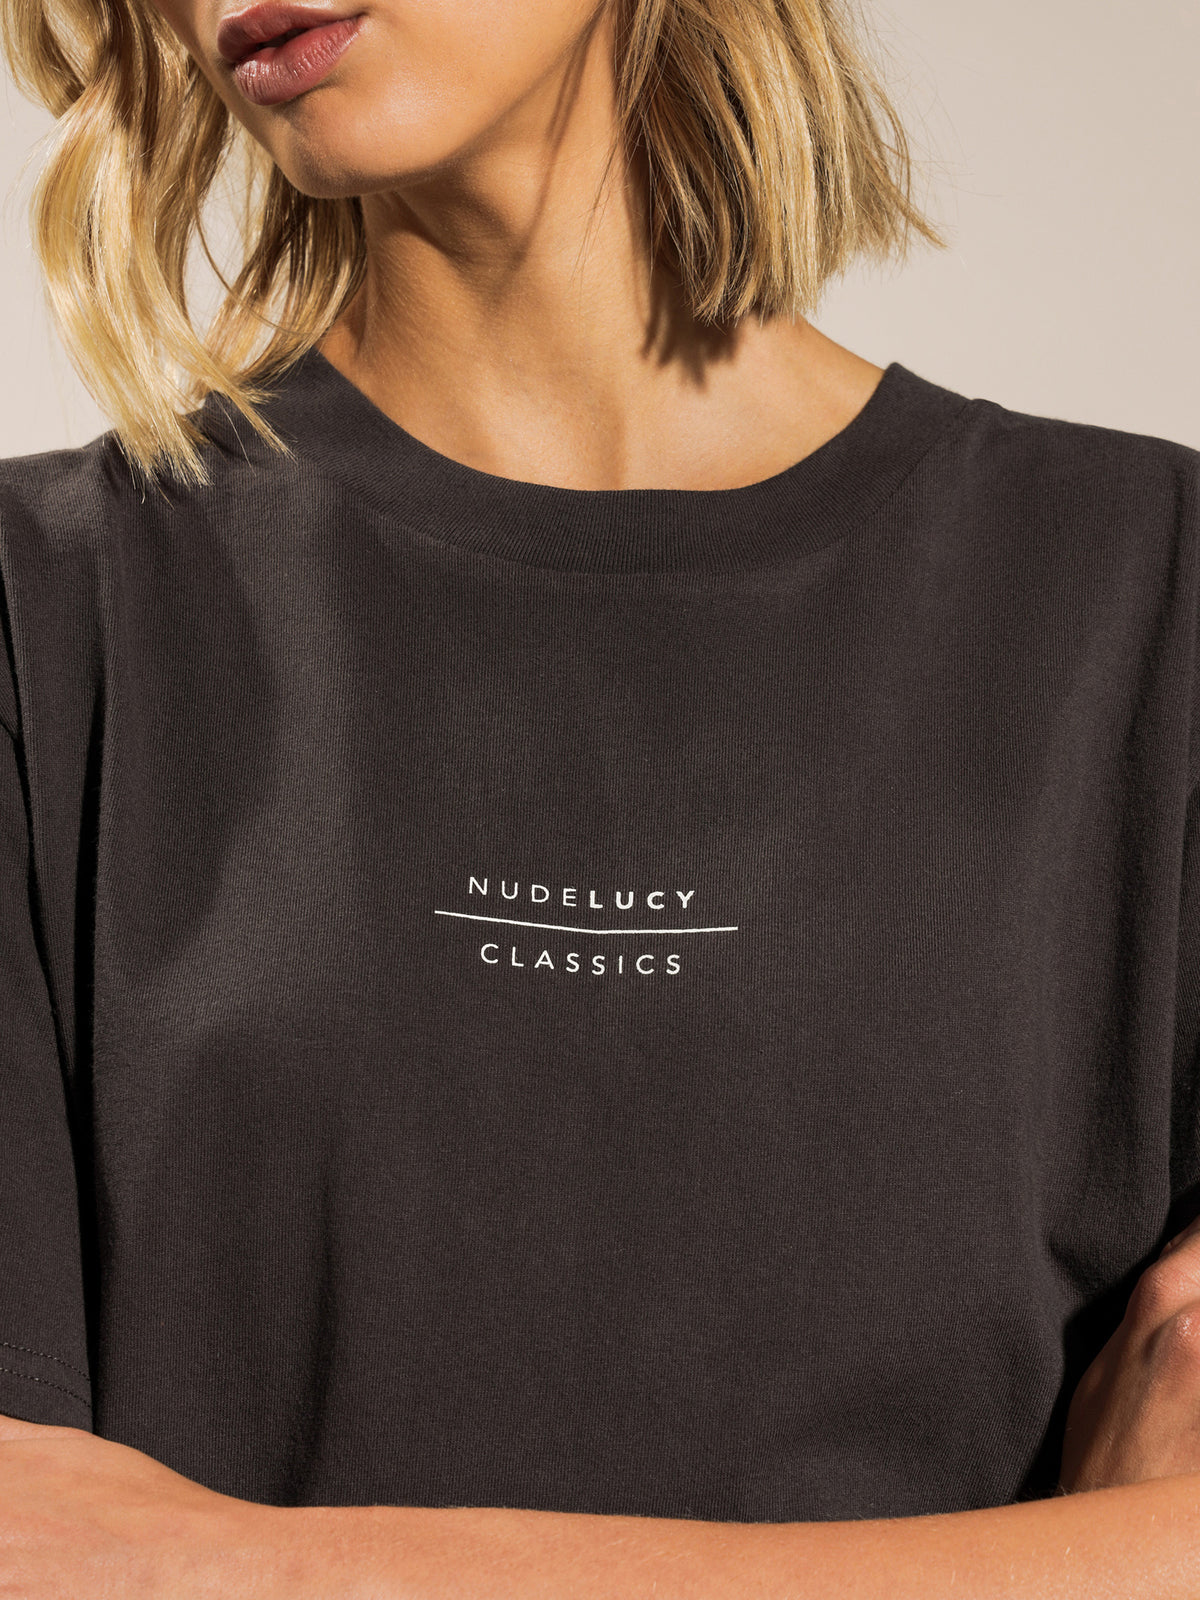 Nude Classics Slogan Boyfriend T-Shirt in Coal